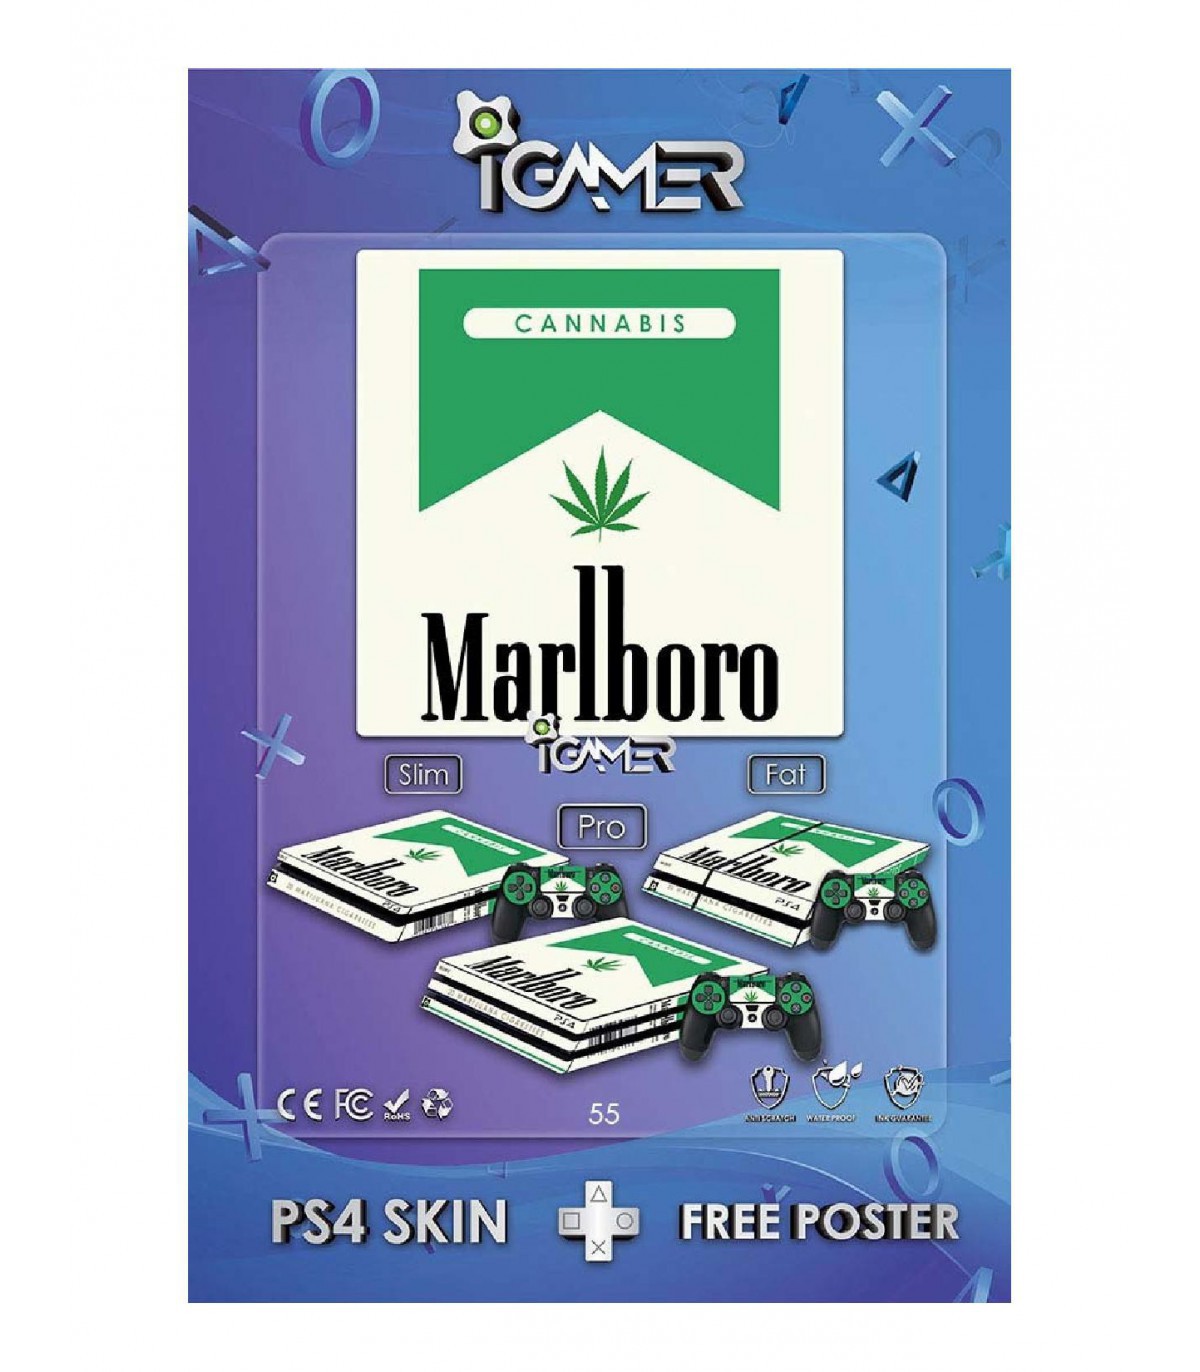 اسکین PS4 اسلیم طرح Marlboro Cannabis